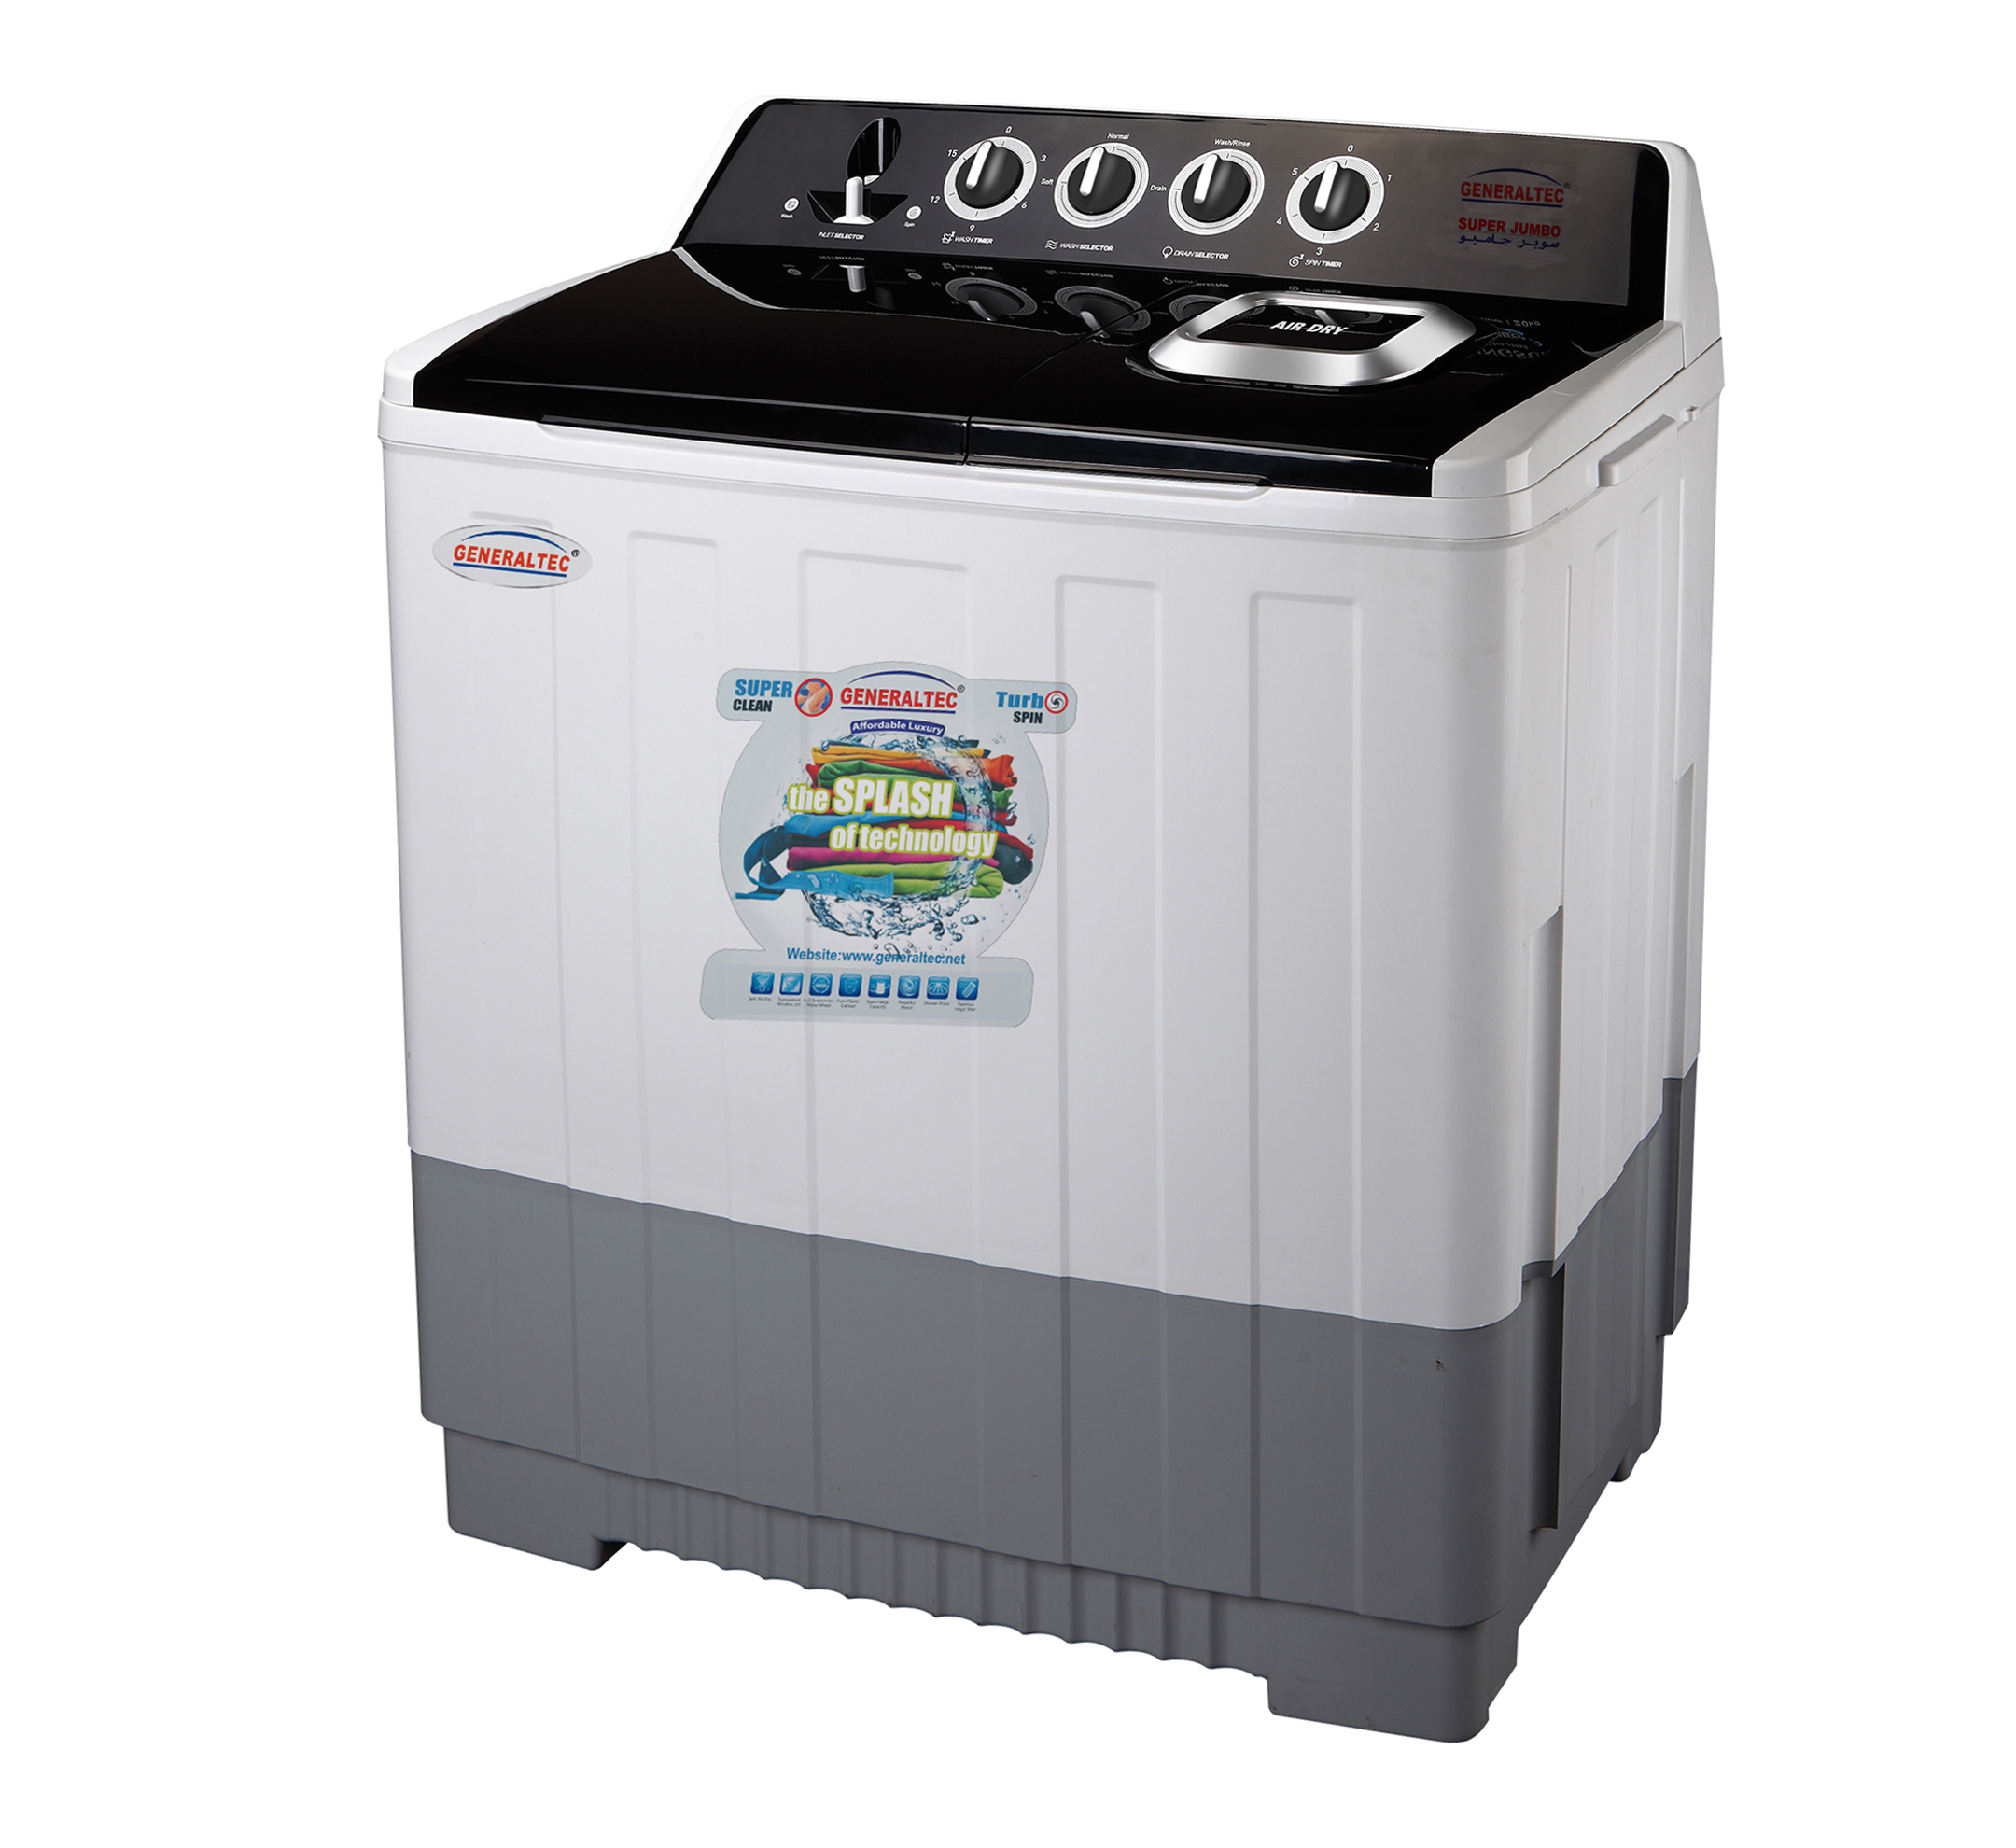 Washing Machine, Model No.GW2000K (Top Load Semi-Automatic Wash/Dry)